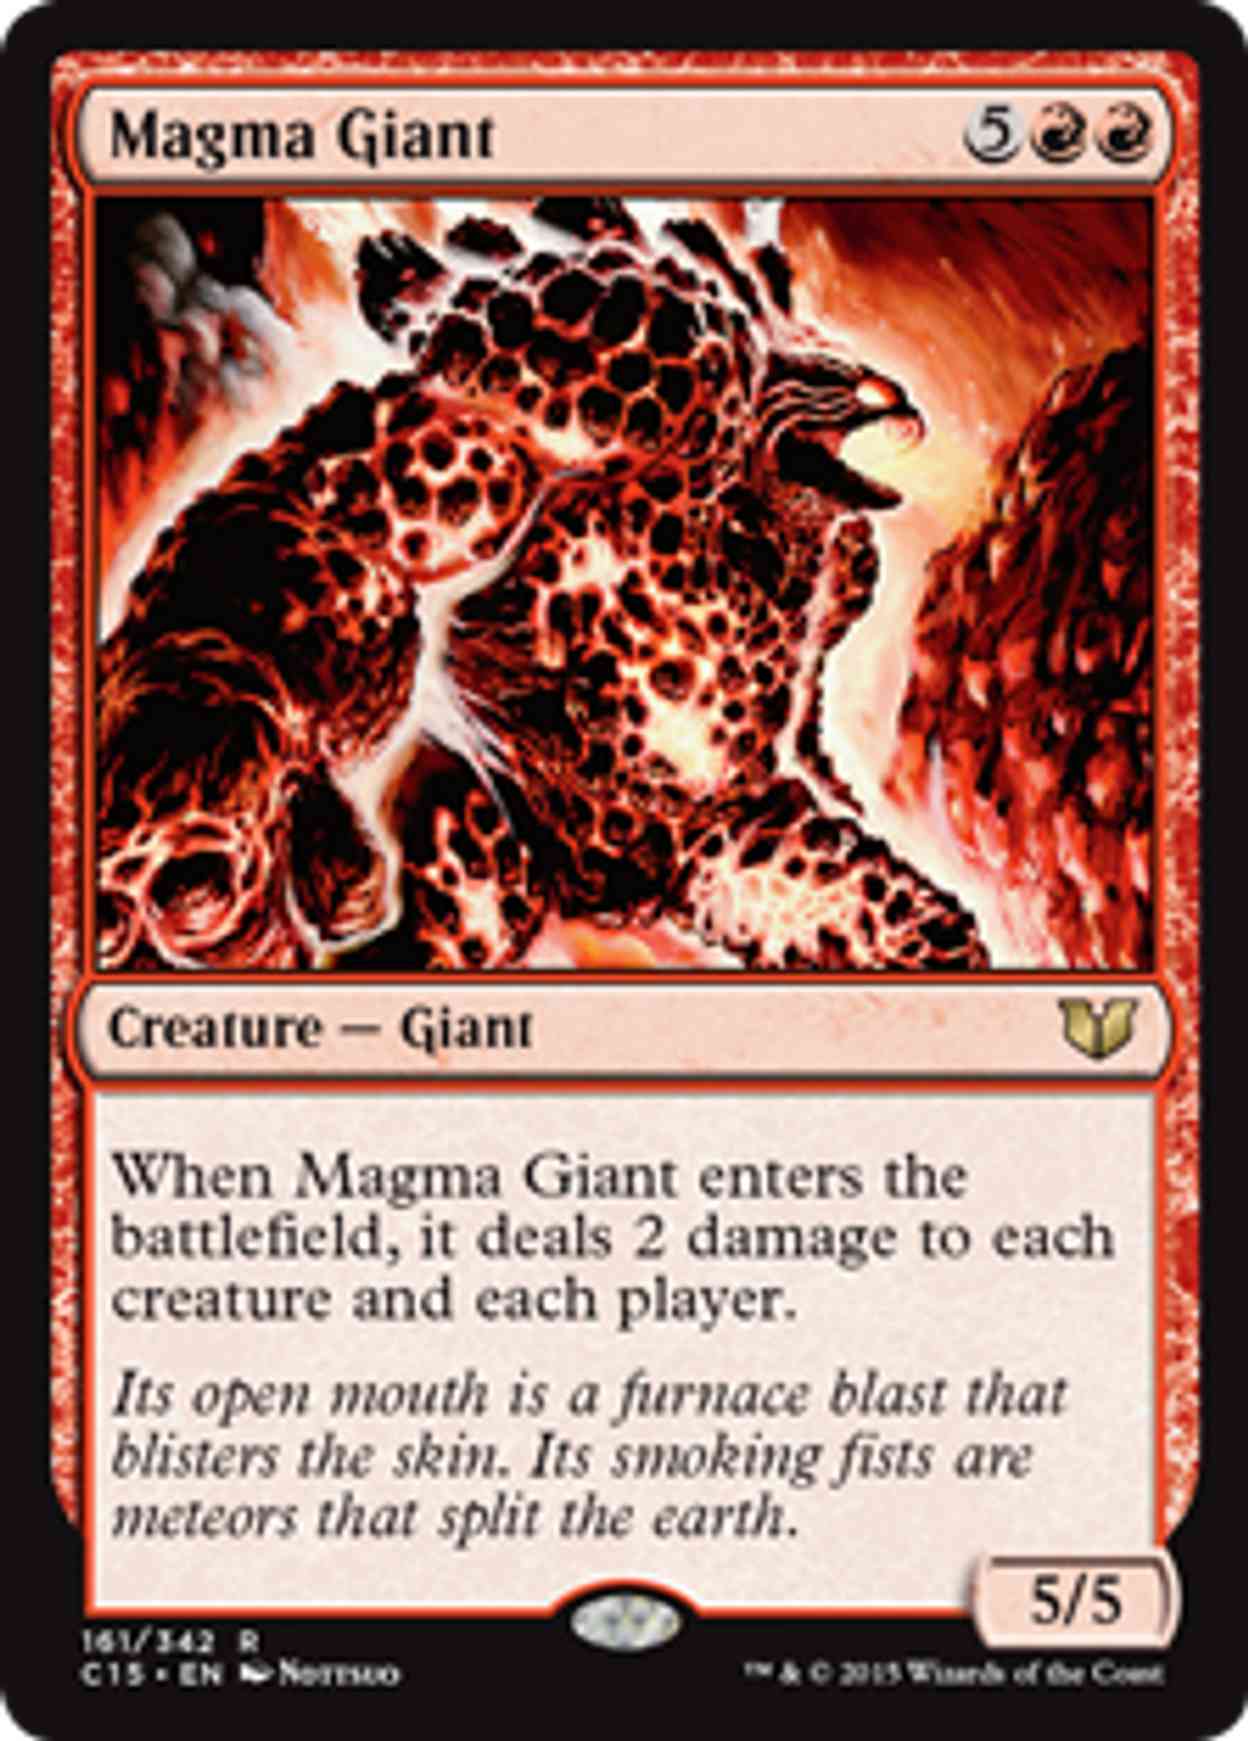 Magma Giant magic card front